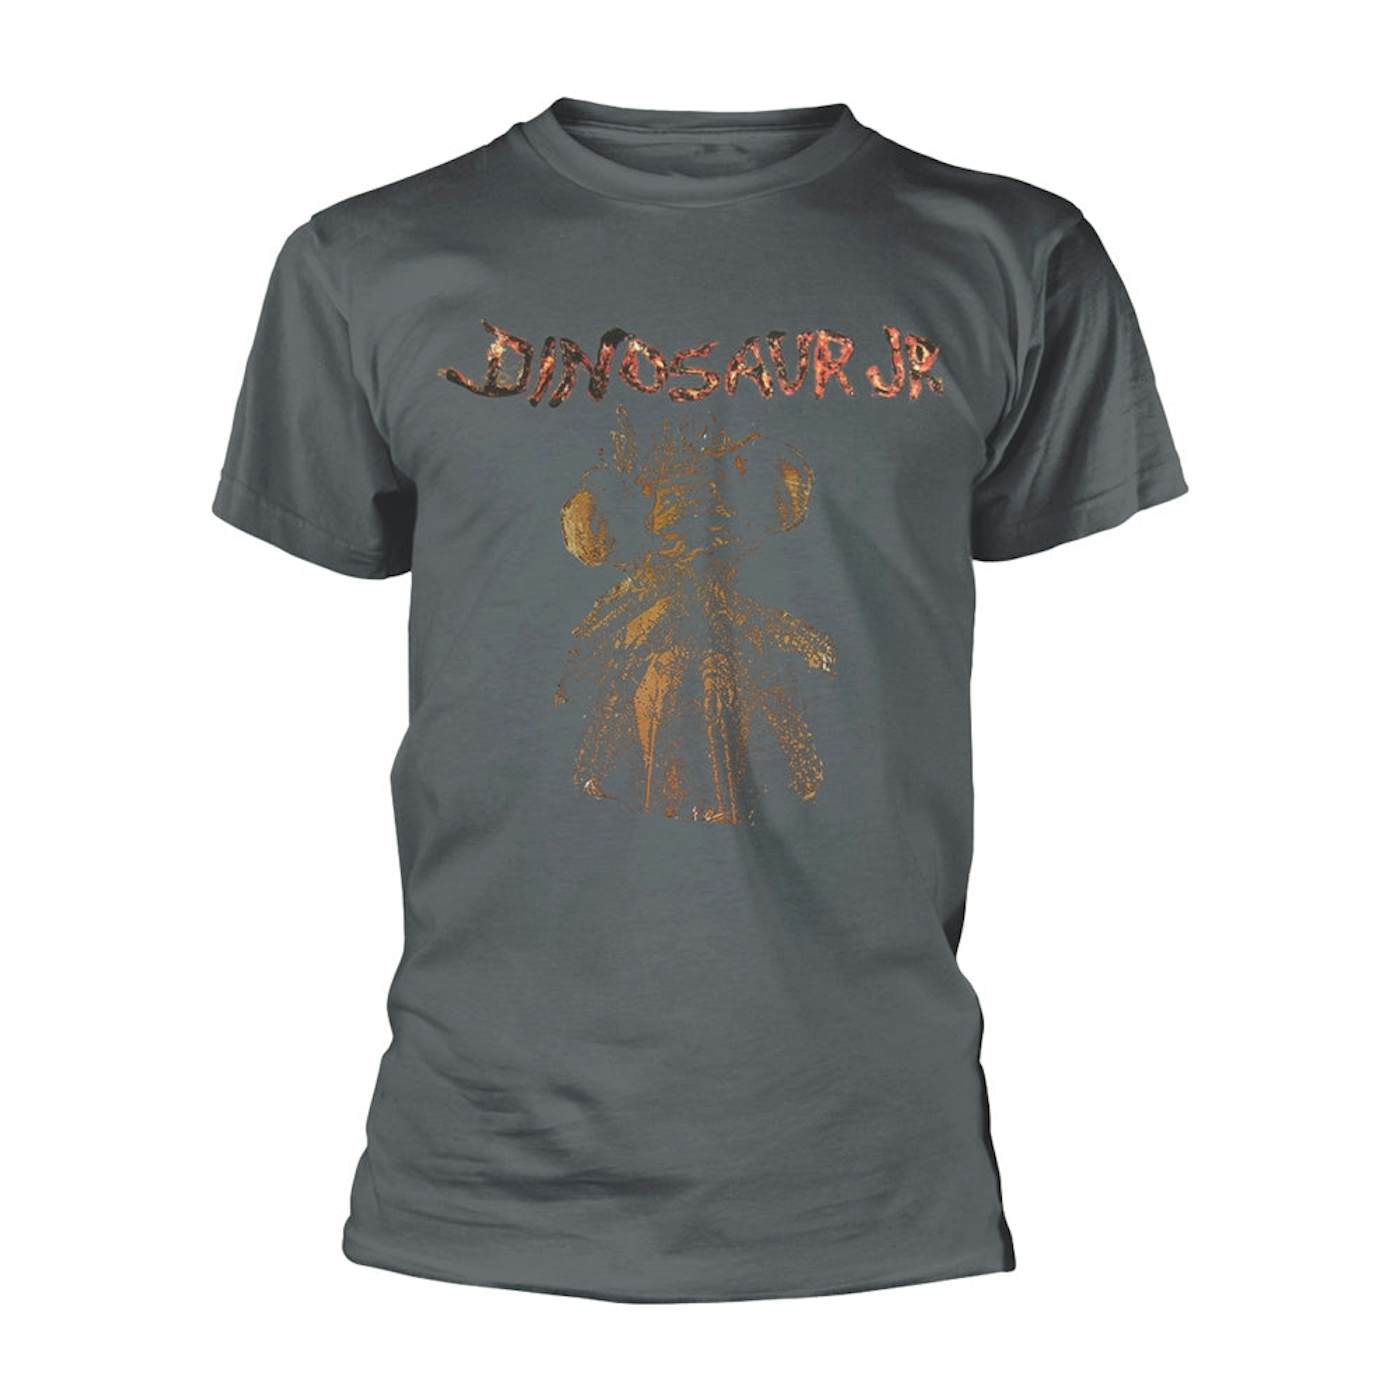 Dinosaur Jr. T Shirt - Bug (Charcoal)